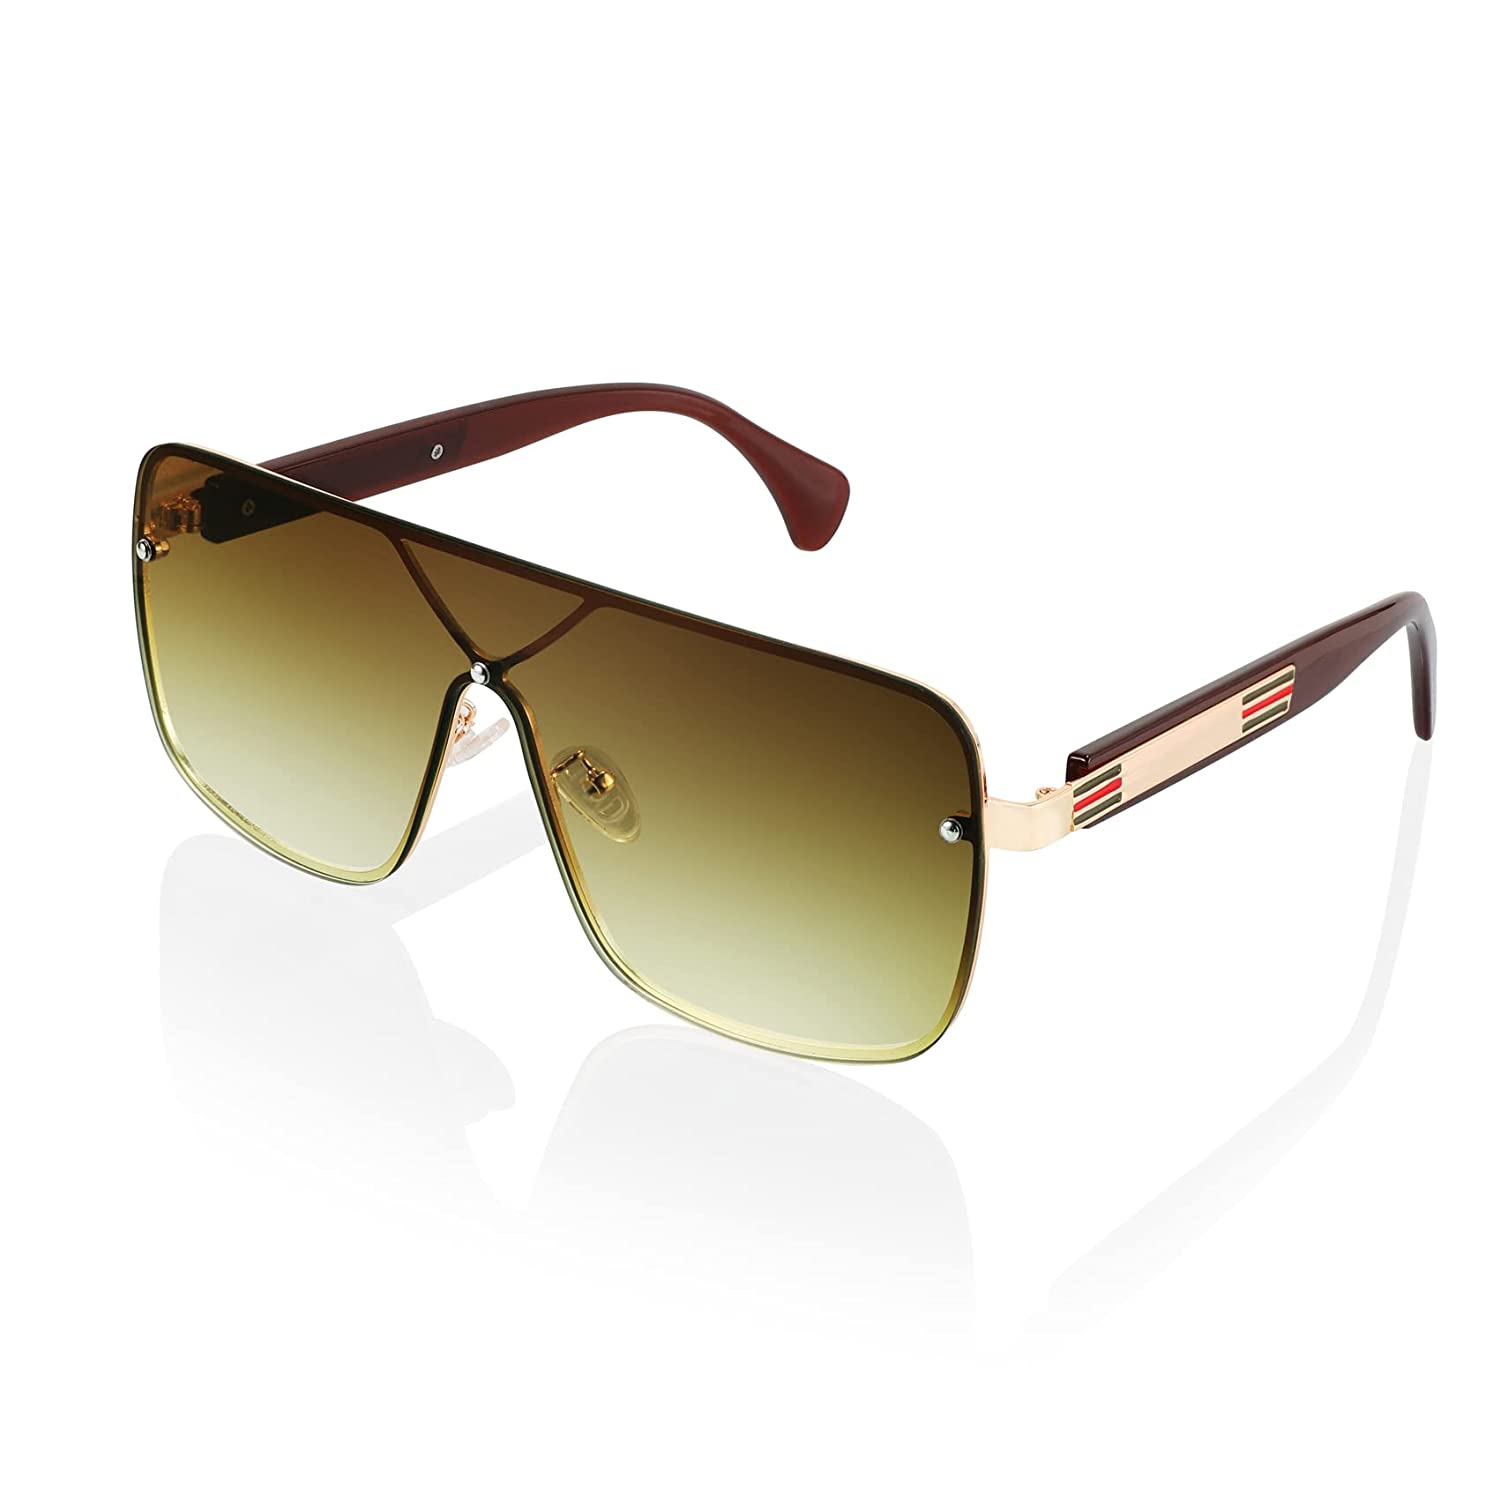 Share 291+ large mens sunglasses latest